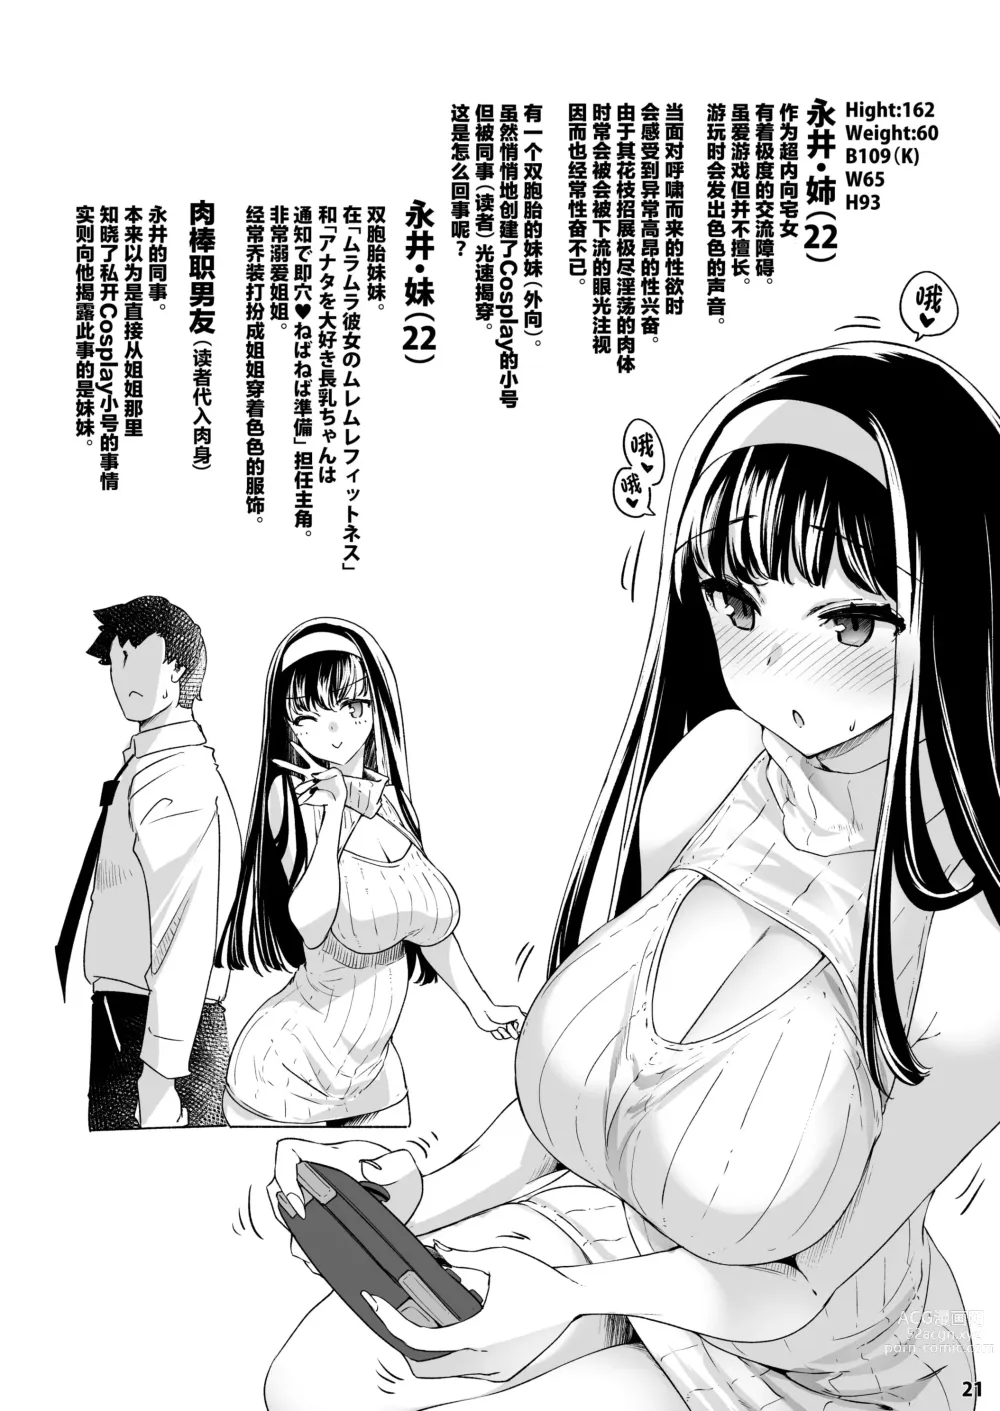 Page 21 of doujinshi 关于K杯长乳COSER不断的绕圈子用小号诱惑我所以我就把她叫出来狠狠地XXX了的事情